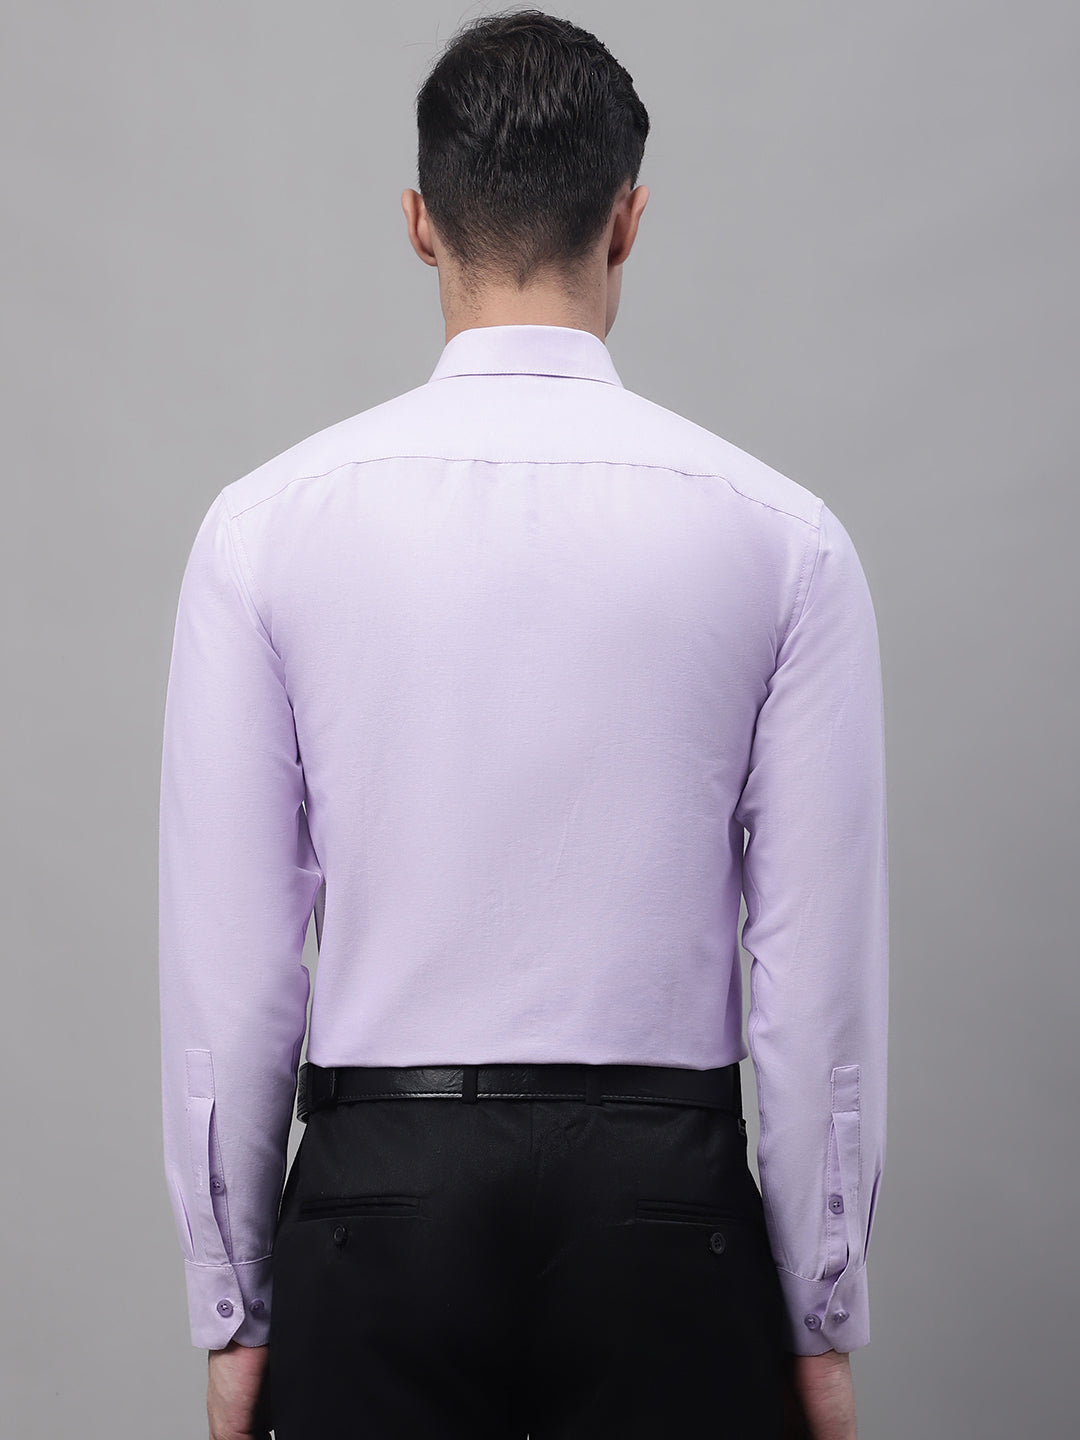 Men's Light Purple Cotton Solid Formal Shirt